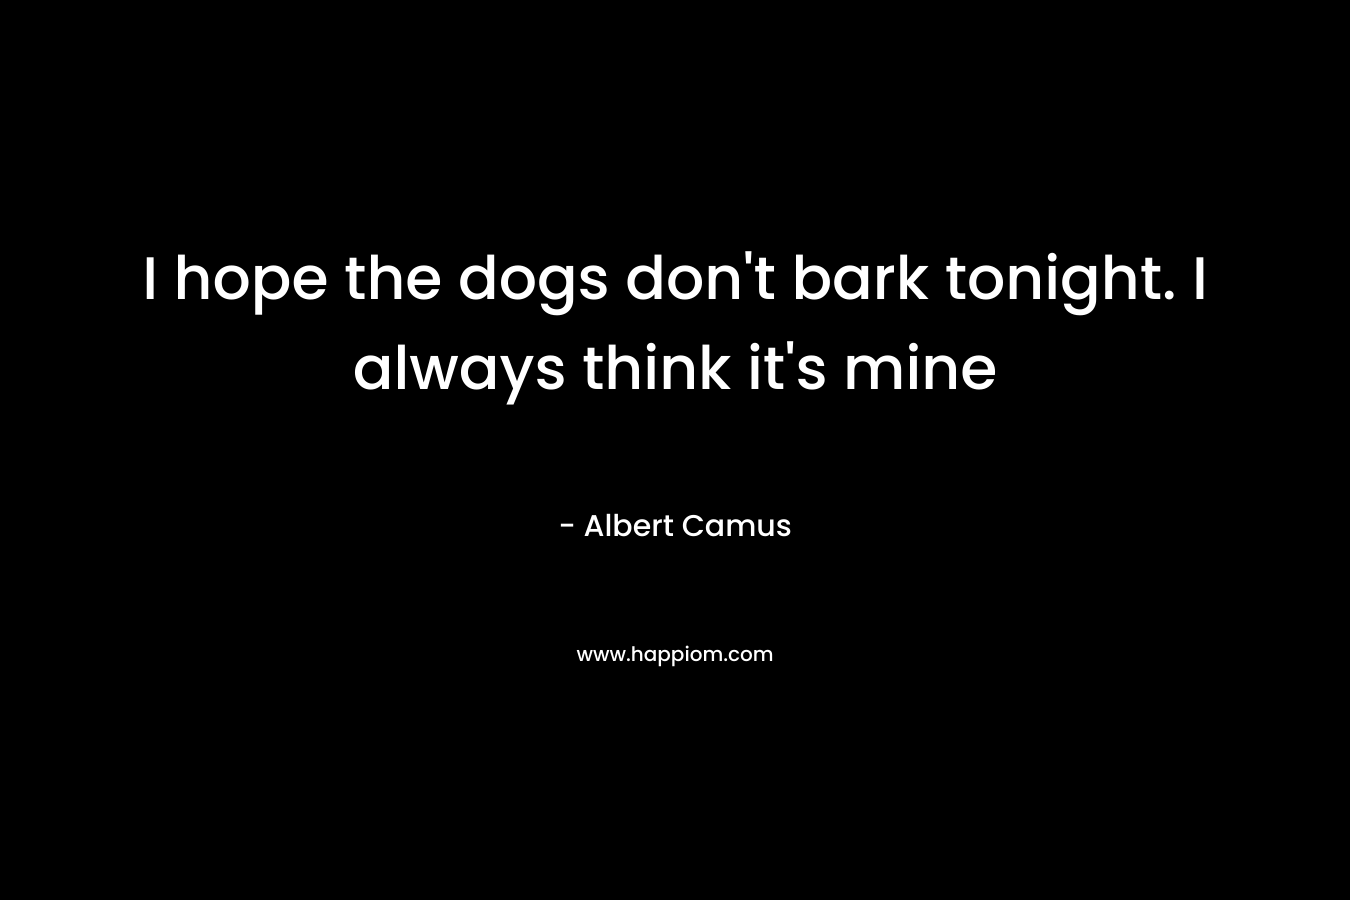 I hope the dogs don't bark tonight. I always think it's mine